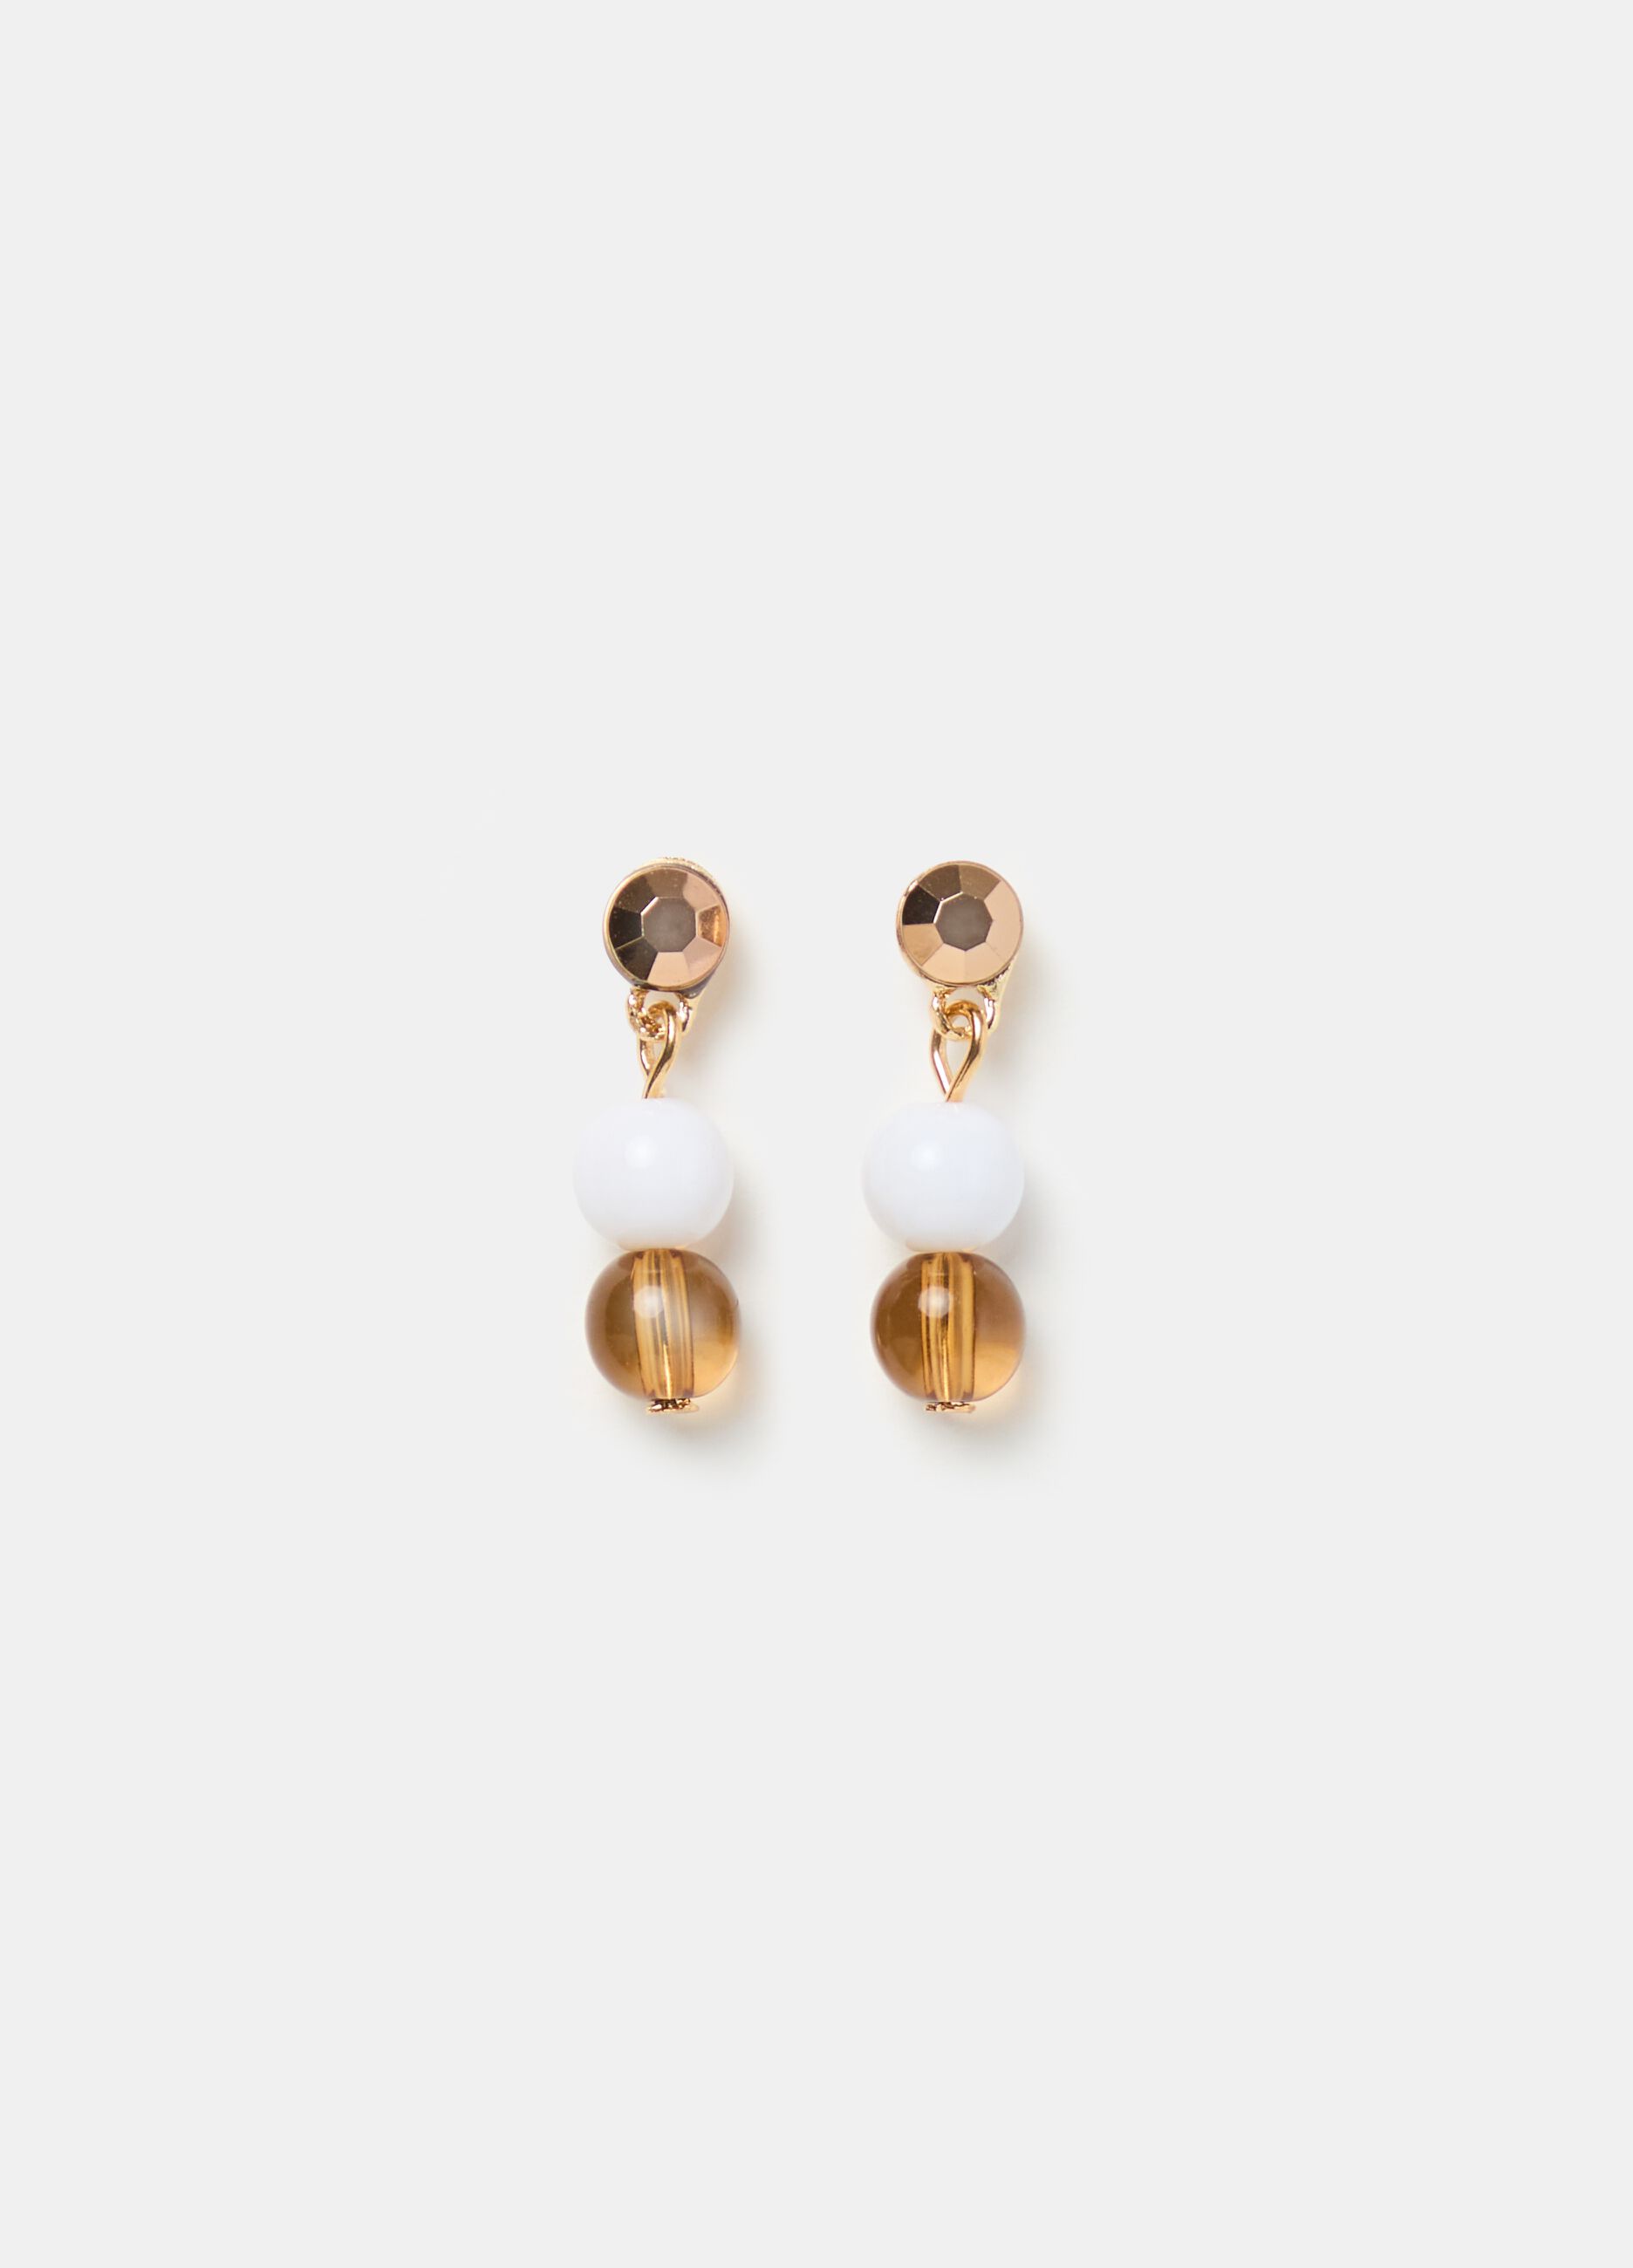 Pendant earrings with balls